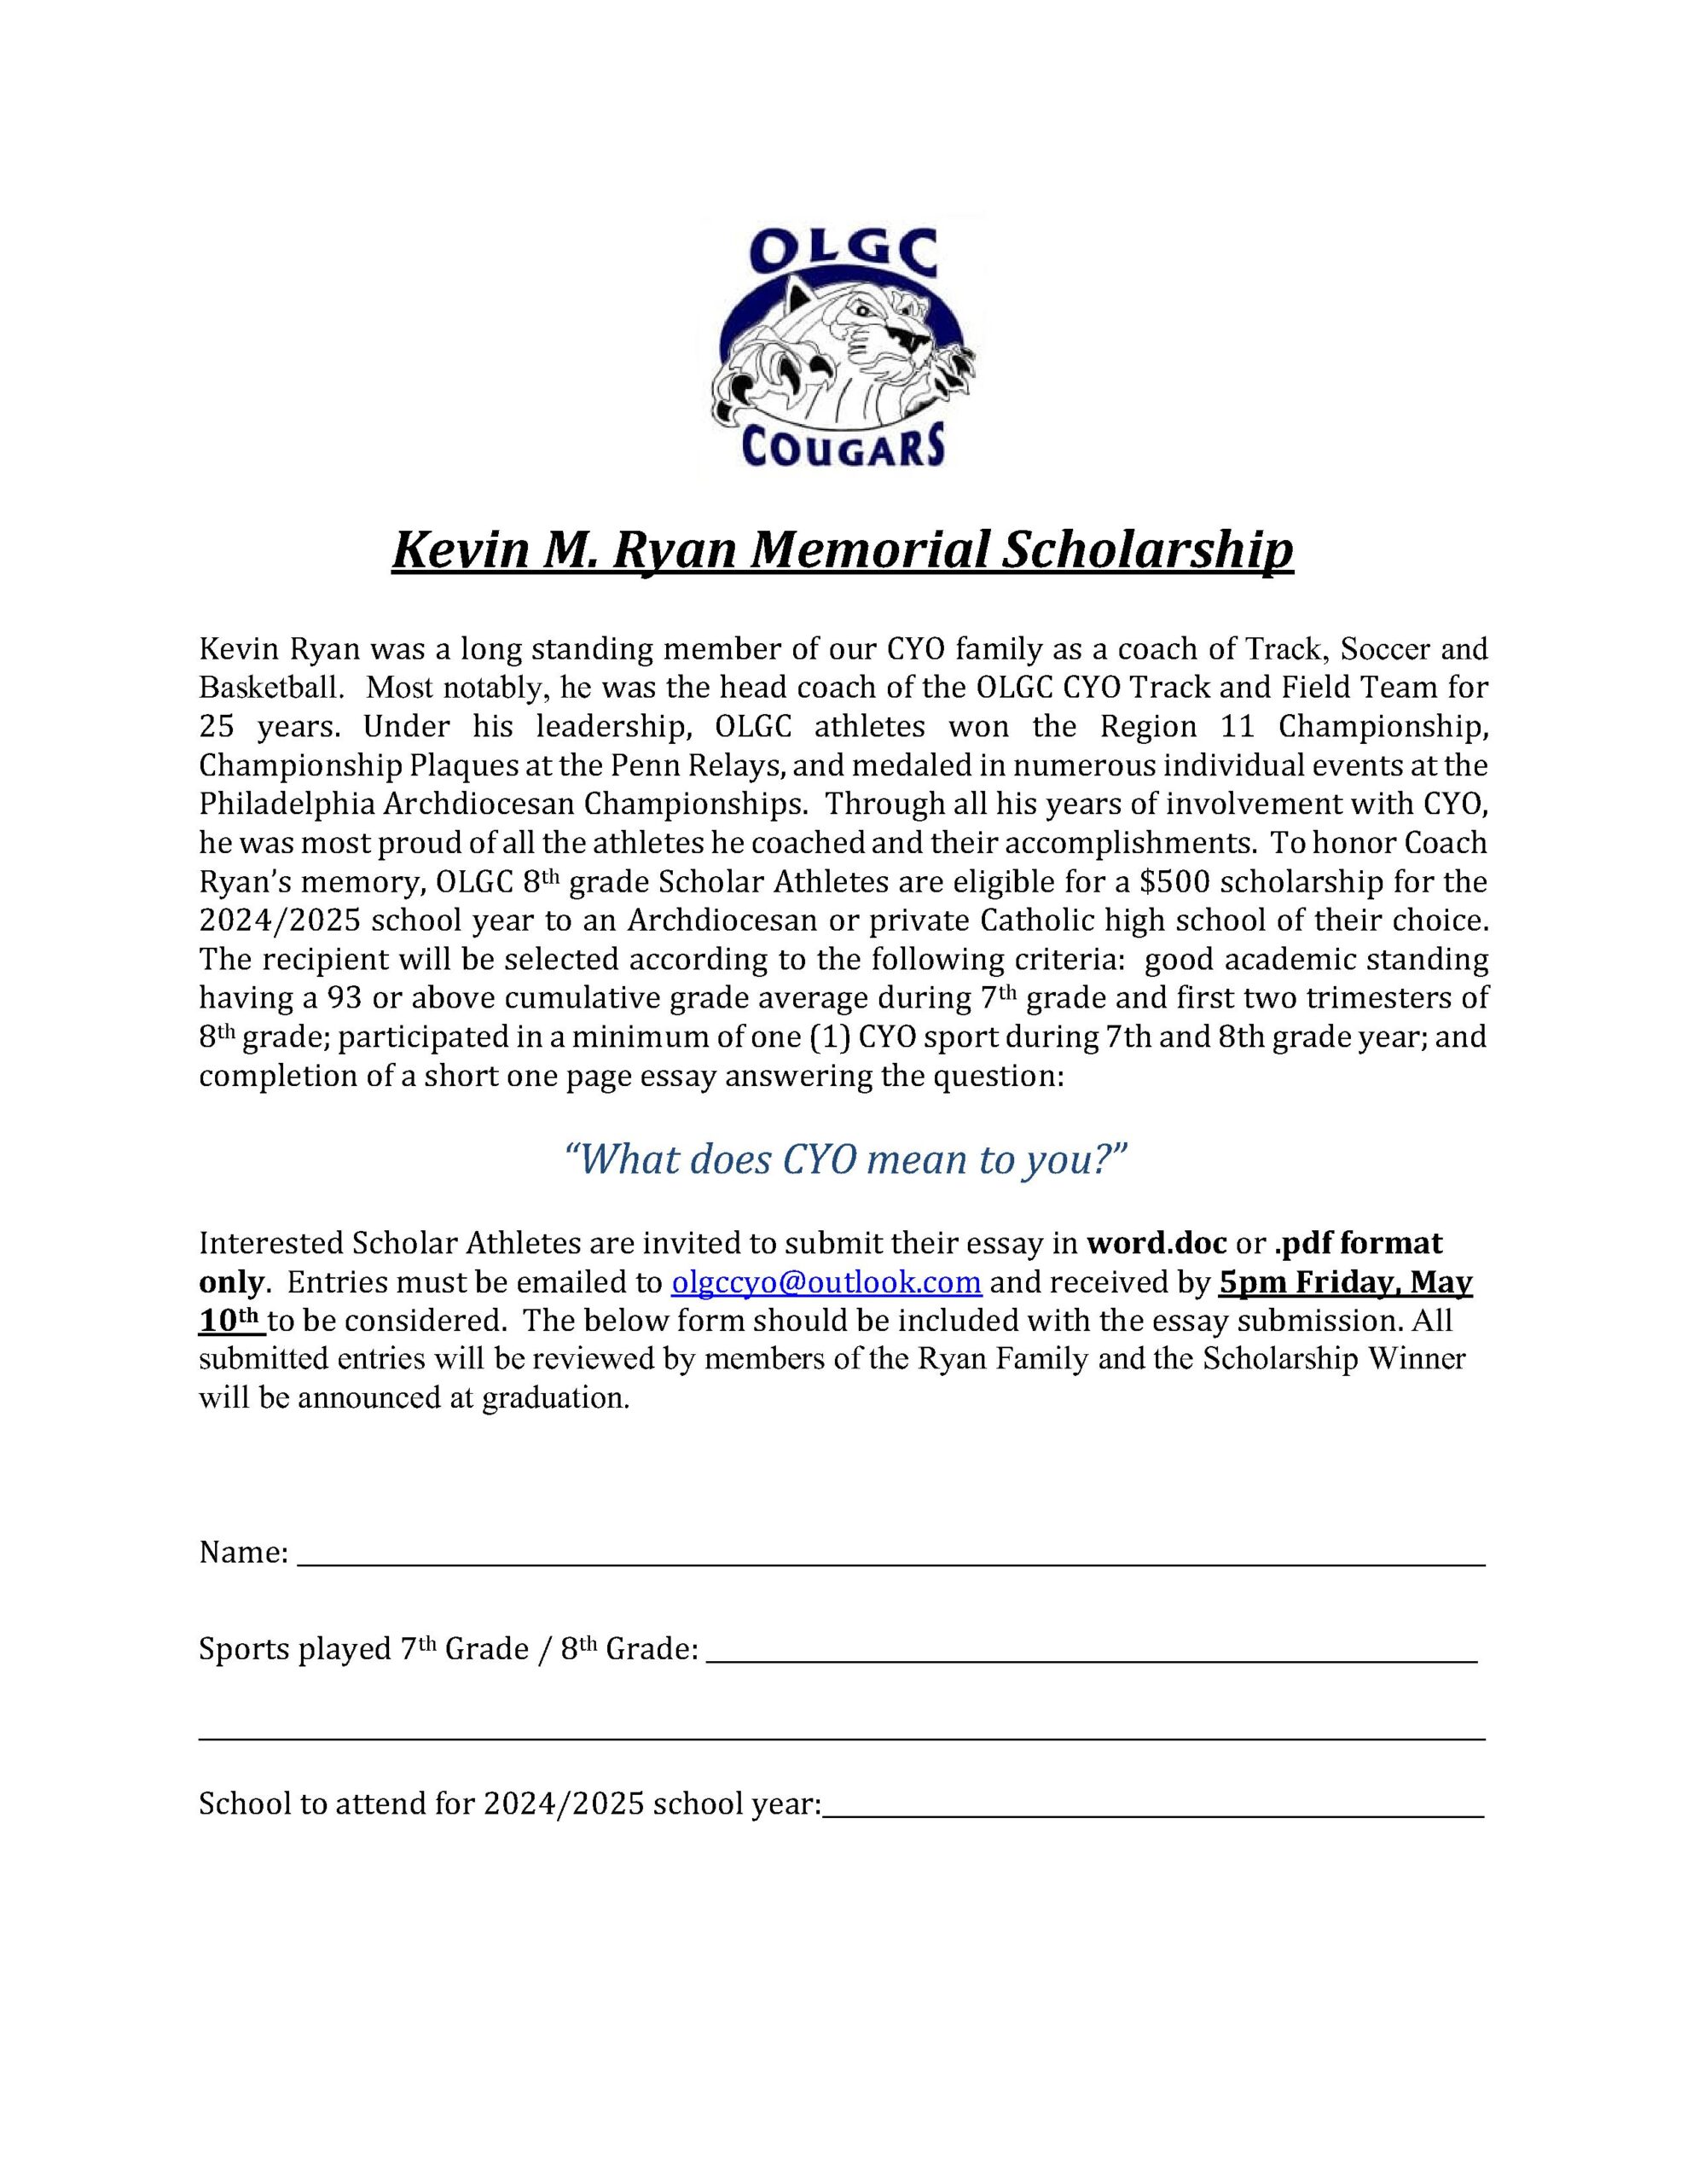 2024 Kevin M Ryan Memorial Scholarship Application